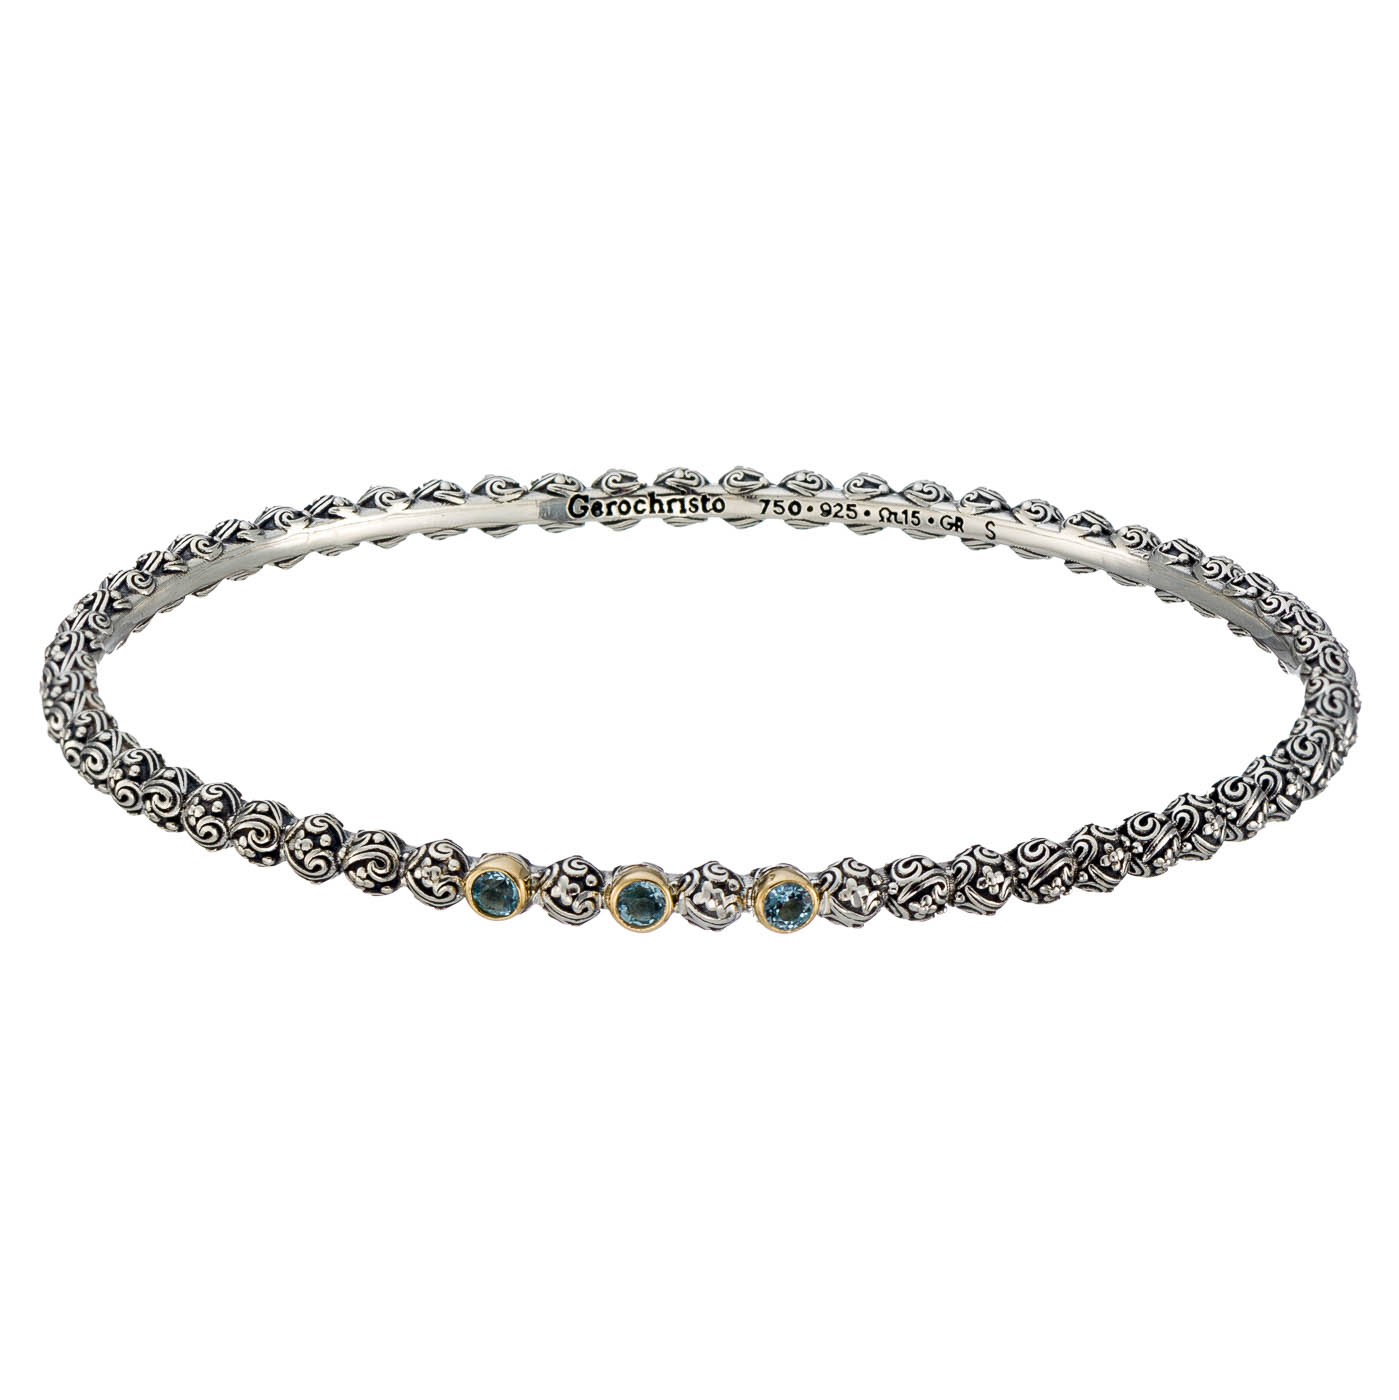 Eden's Garden Bangle Bracelet with Gemstones in 18K Gold and Sterling Silver